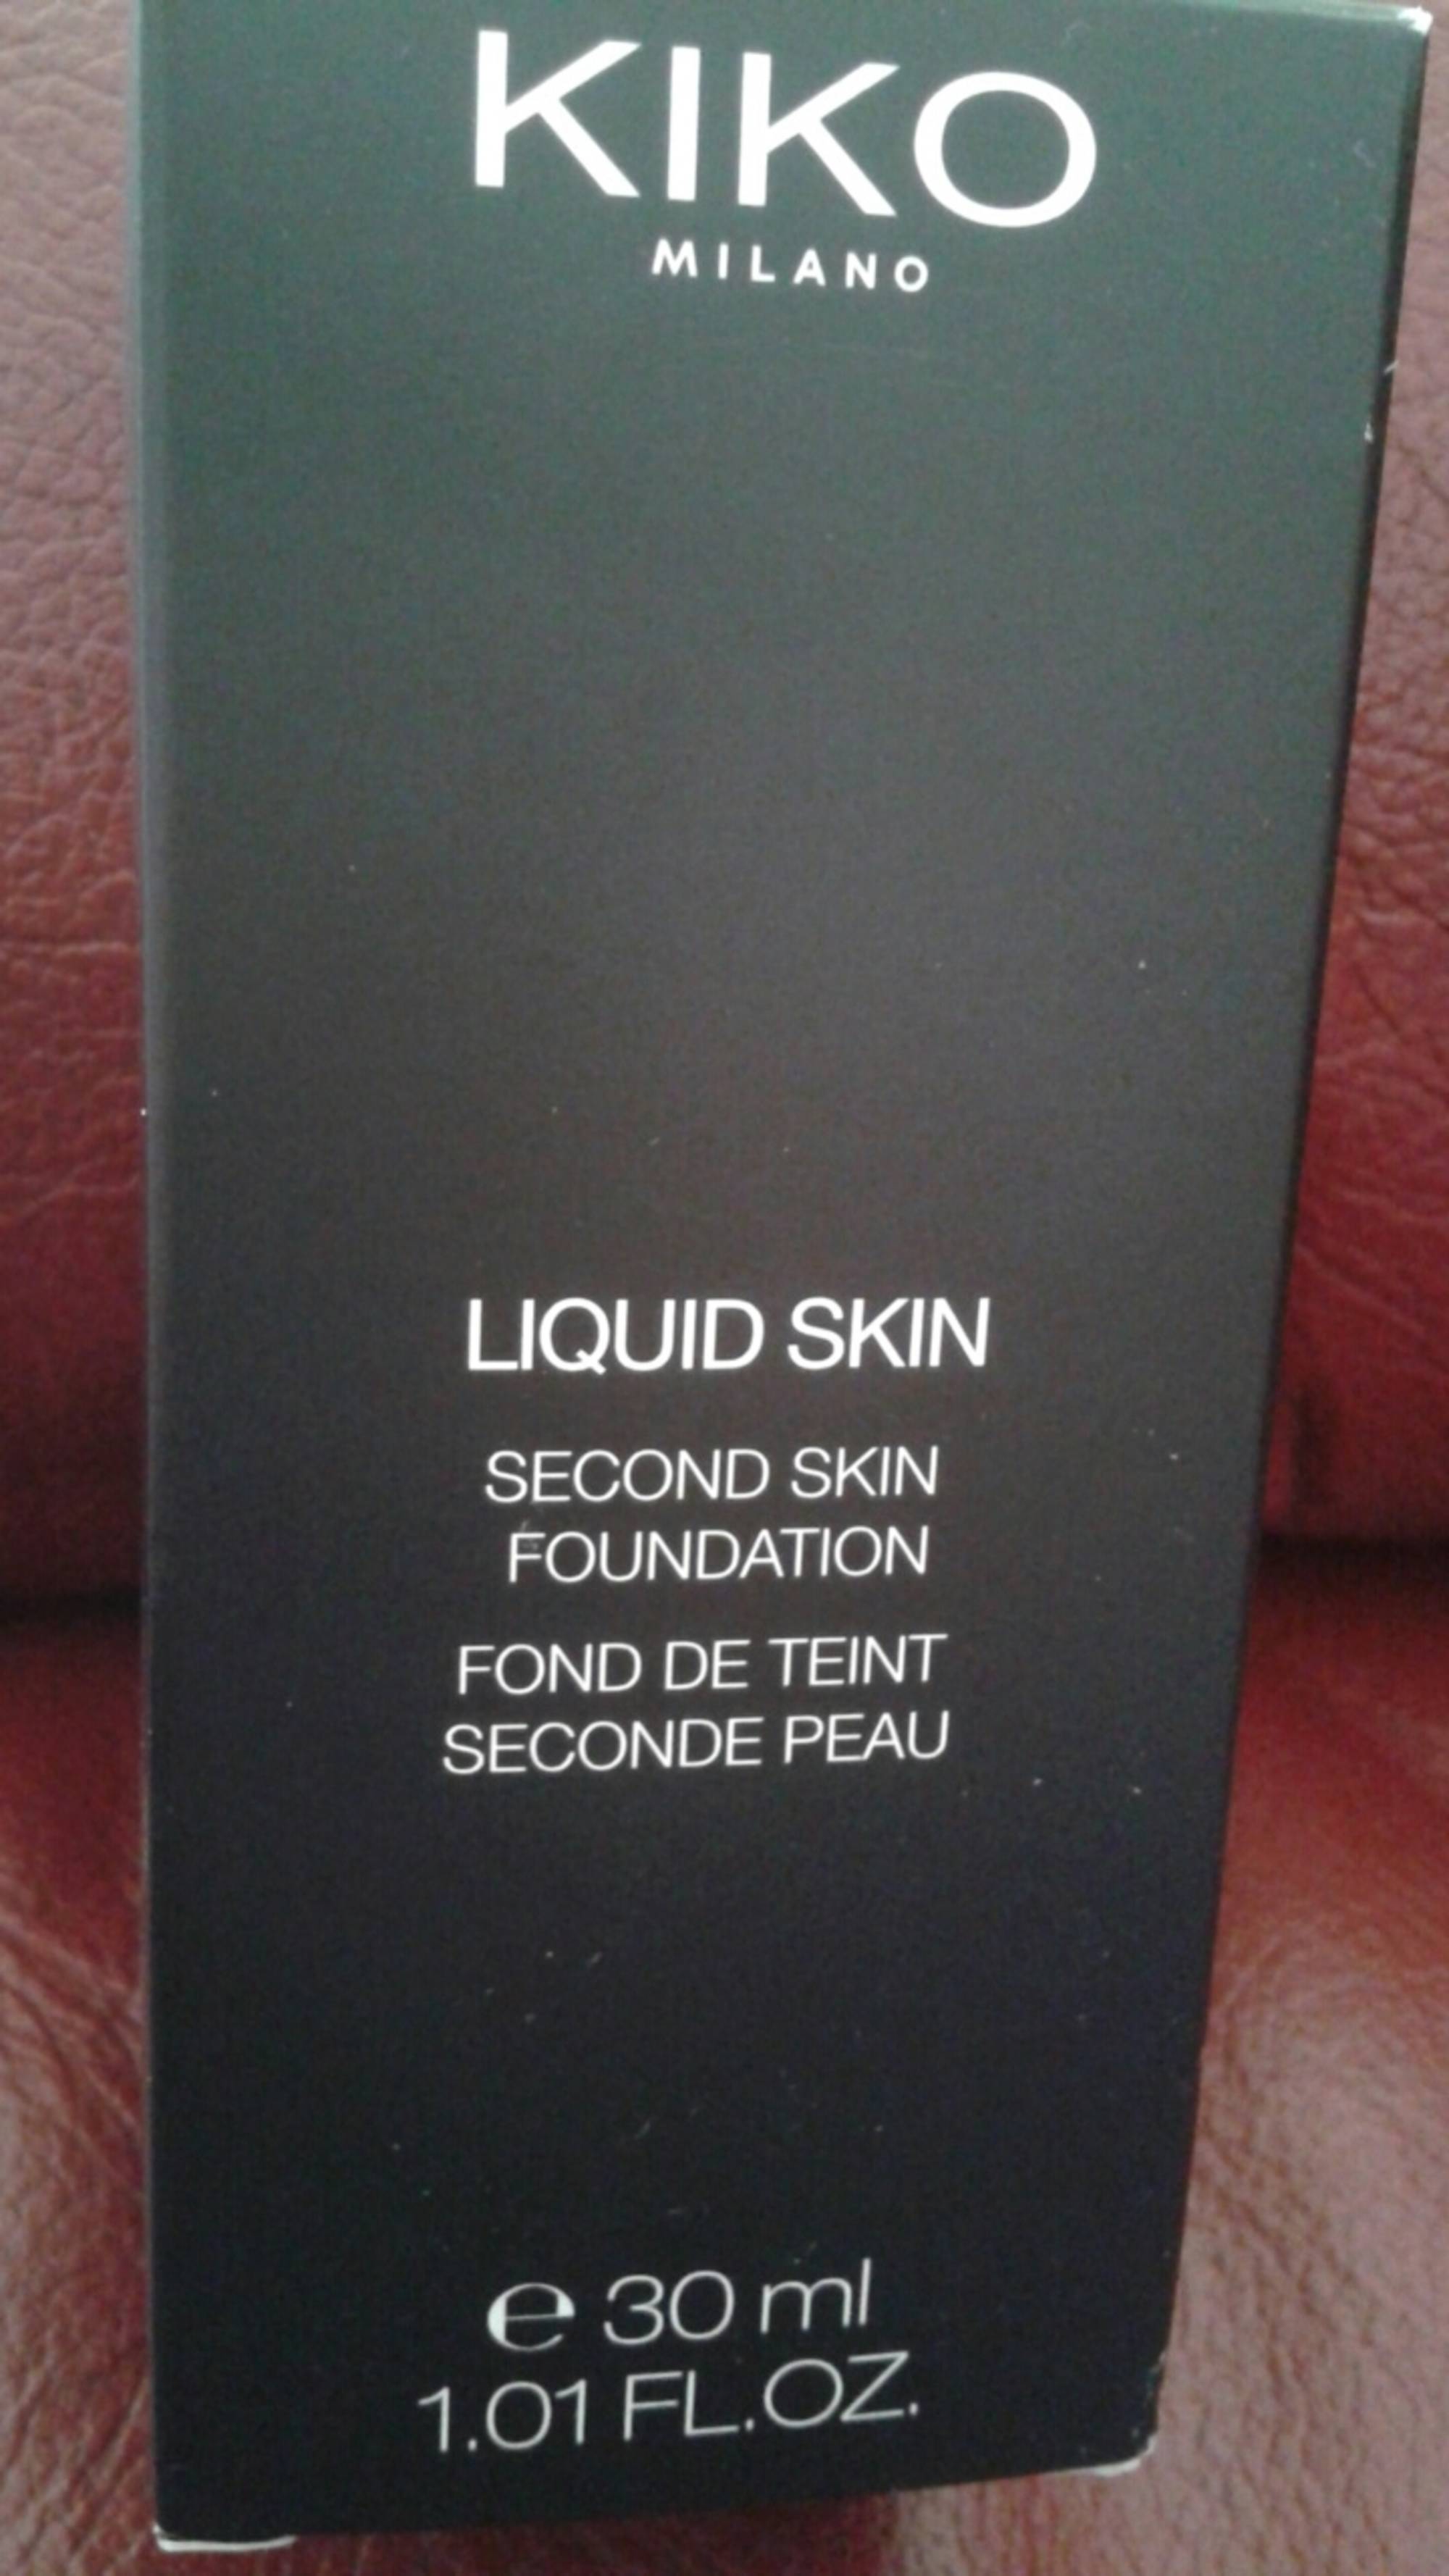 KIKO - Liquid skin - Fond de tein seconde peau